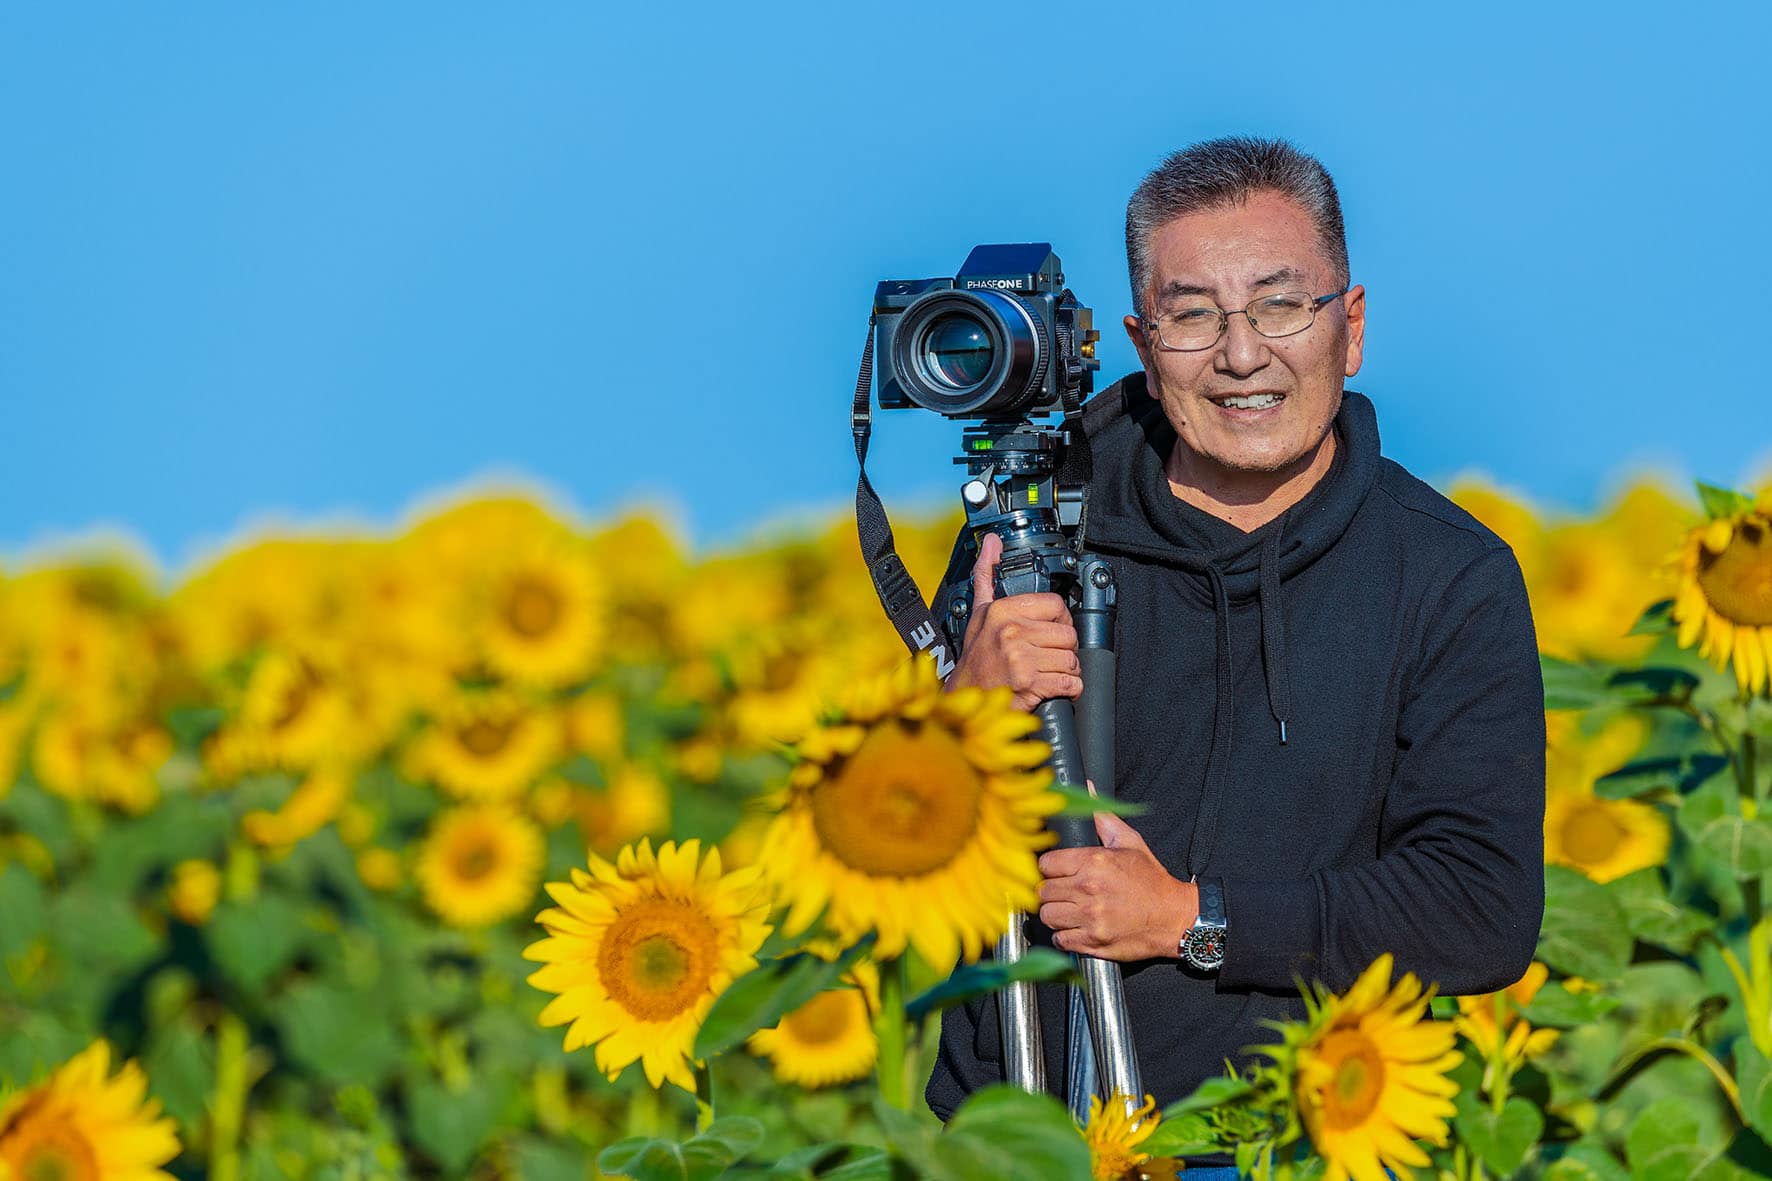 Info Shymkent - Photographer Farhat Kabdykairov from Kazakhstan in a sunflower field